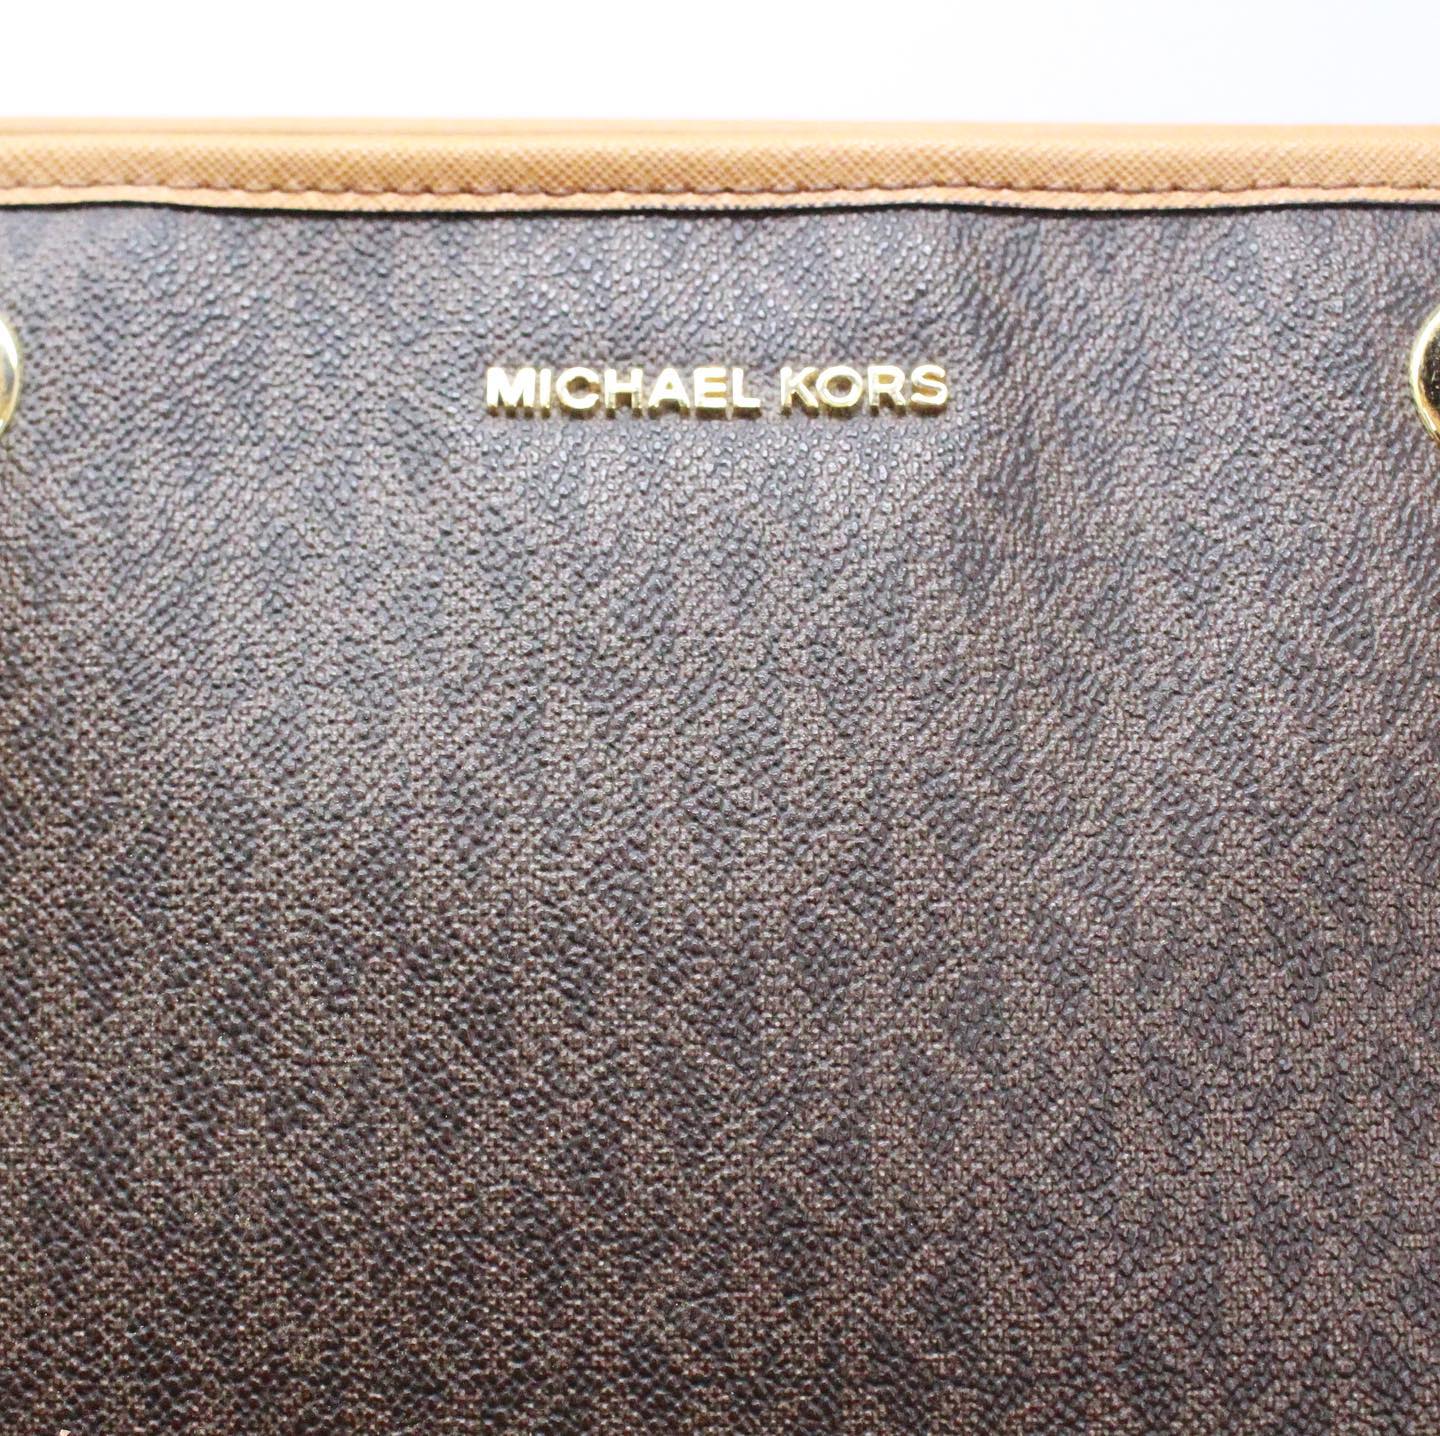 MICHAEL KORS: Michael shopping bag in monogram canvas - Black